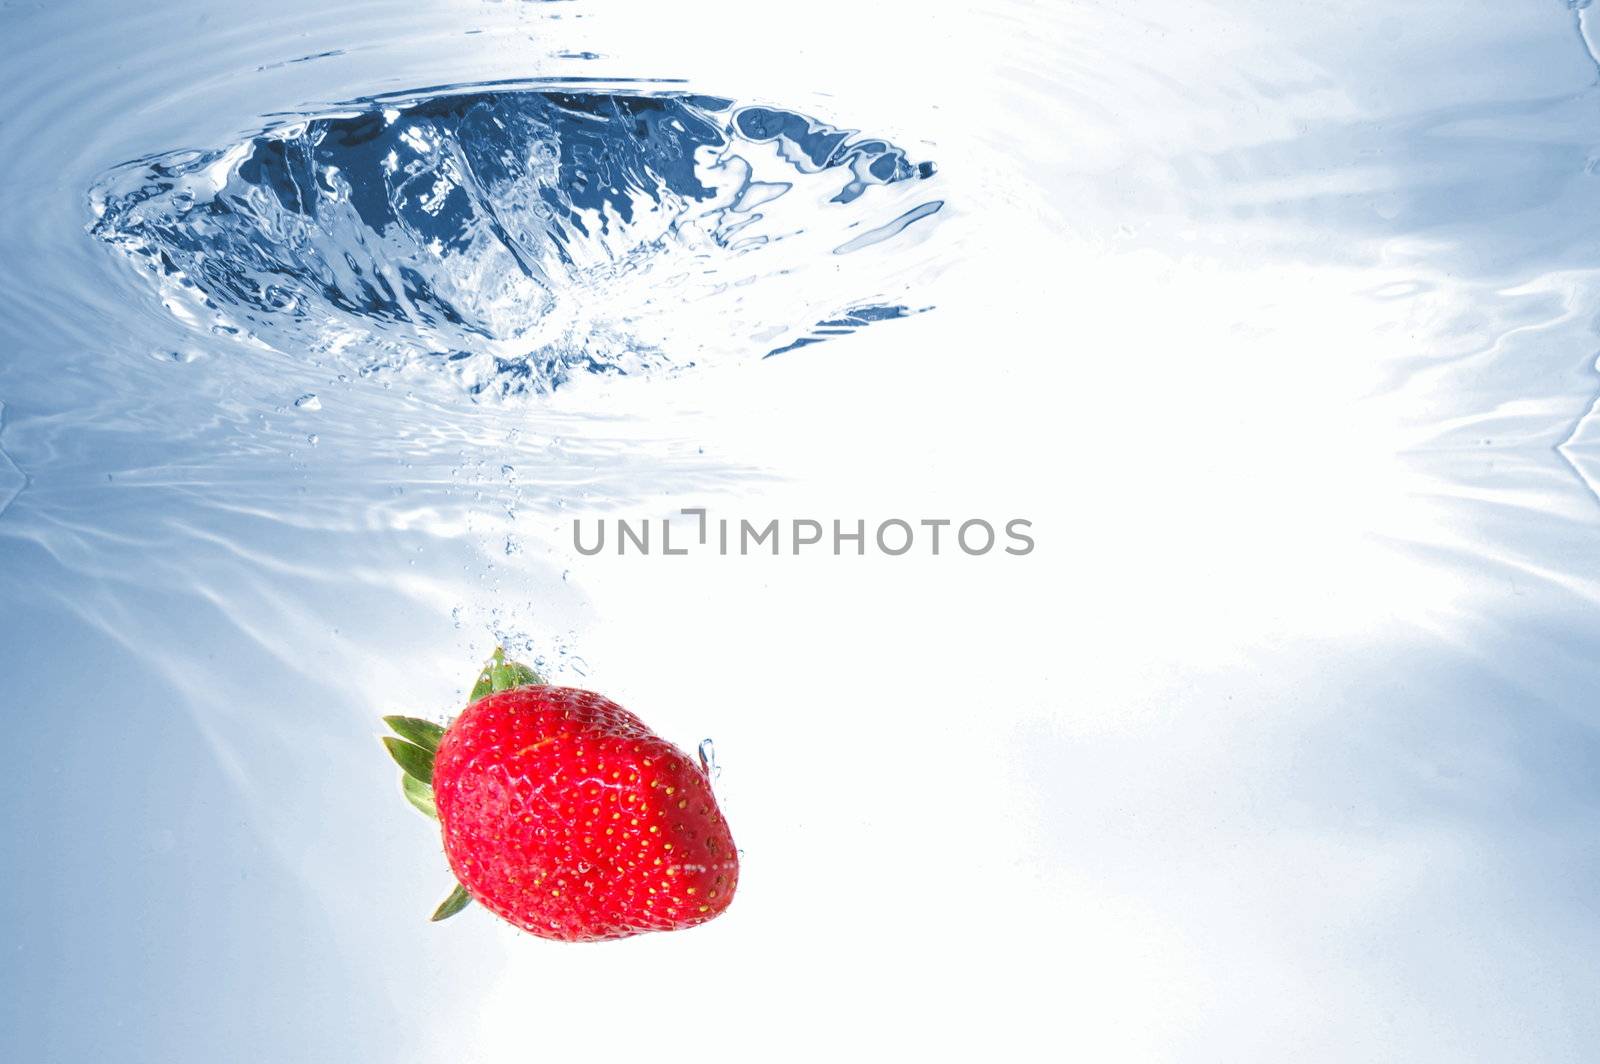 strawberry splash in warter showing healthy lifestyle